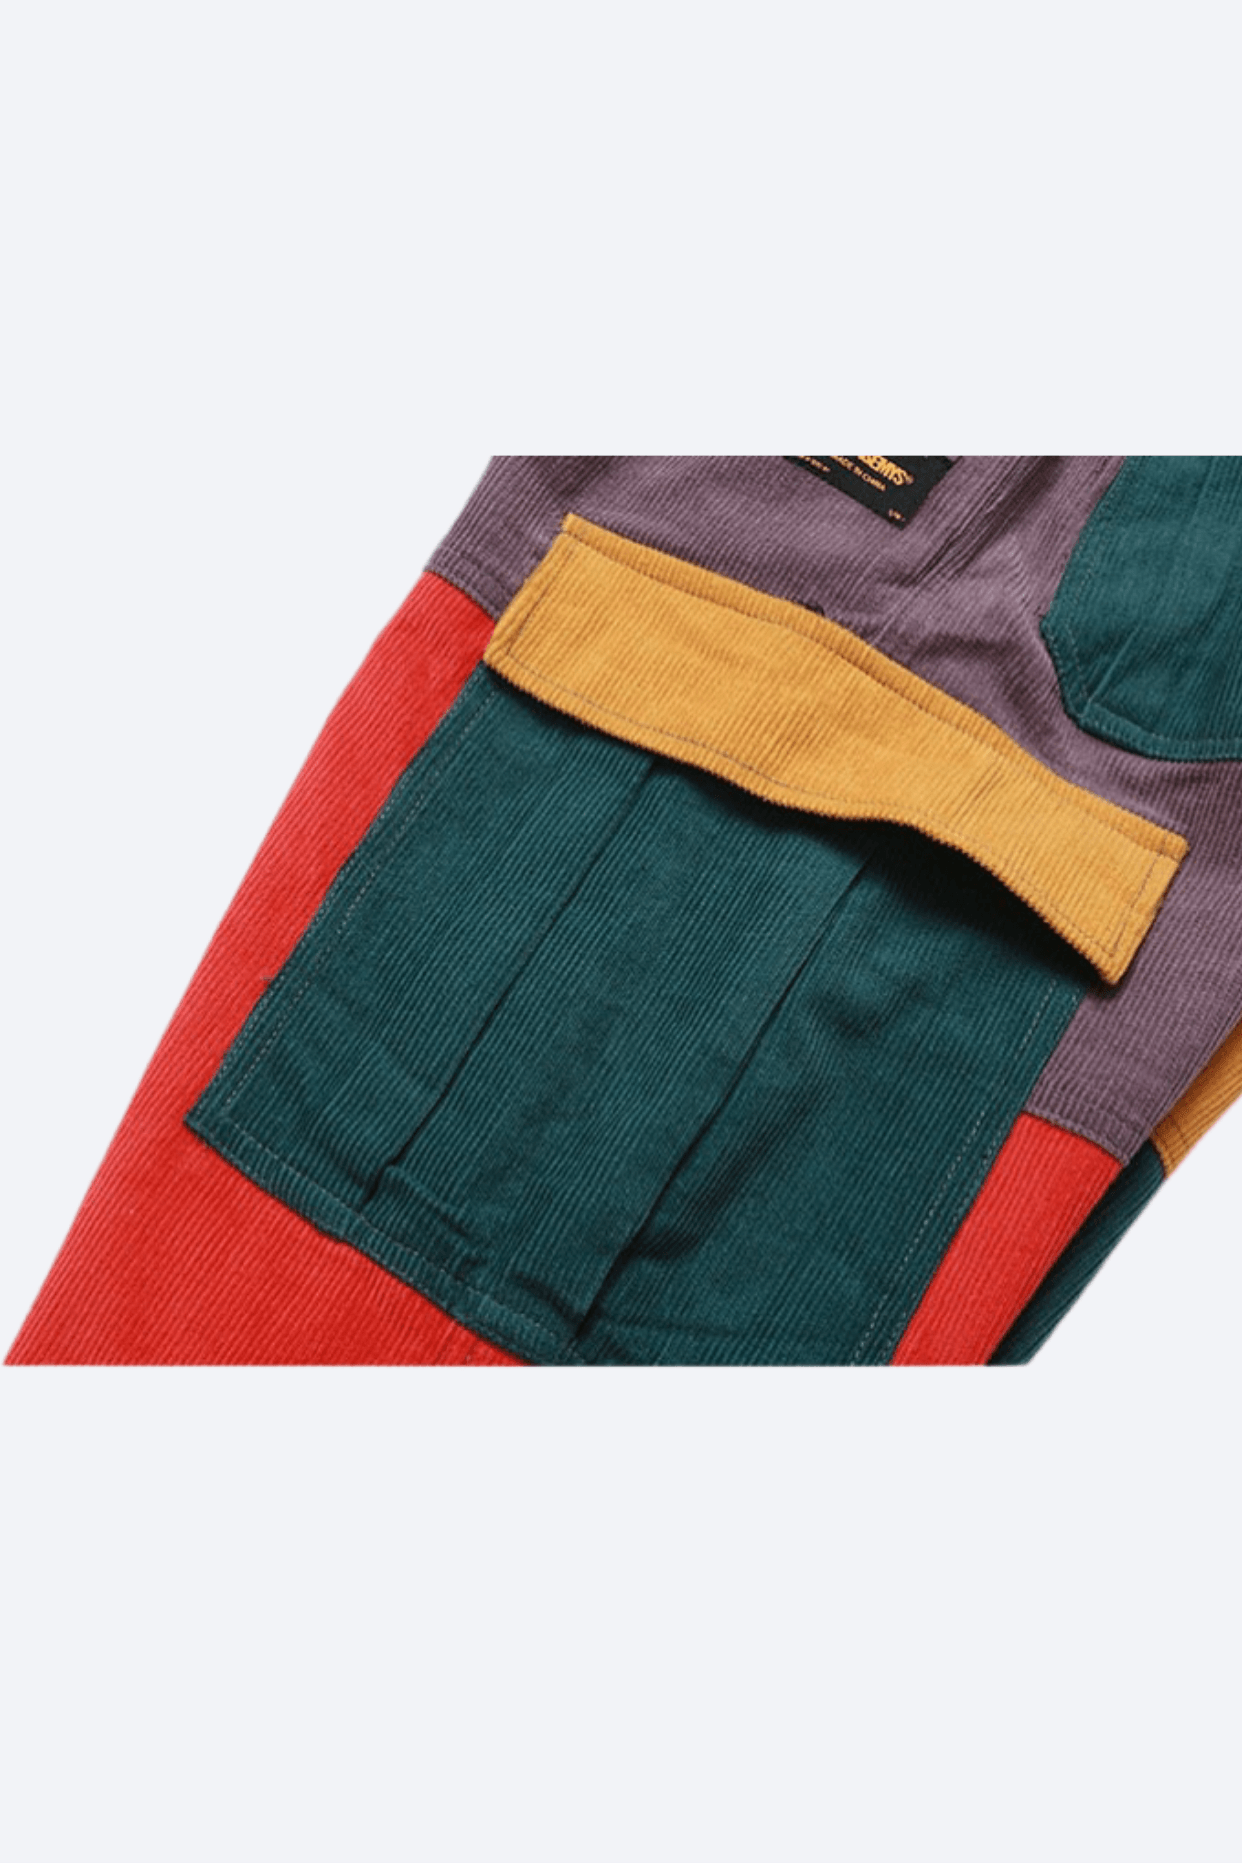 Color Block Pants Streetwear Brand Techwear Combat Tactical YUGEN THEORY